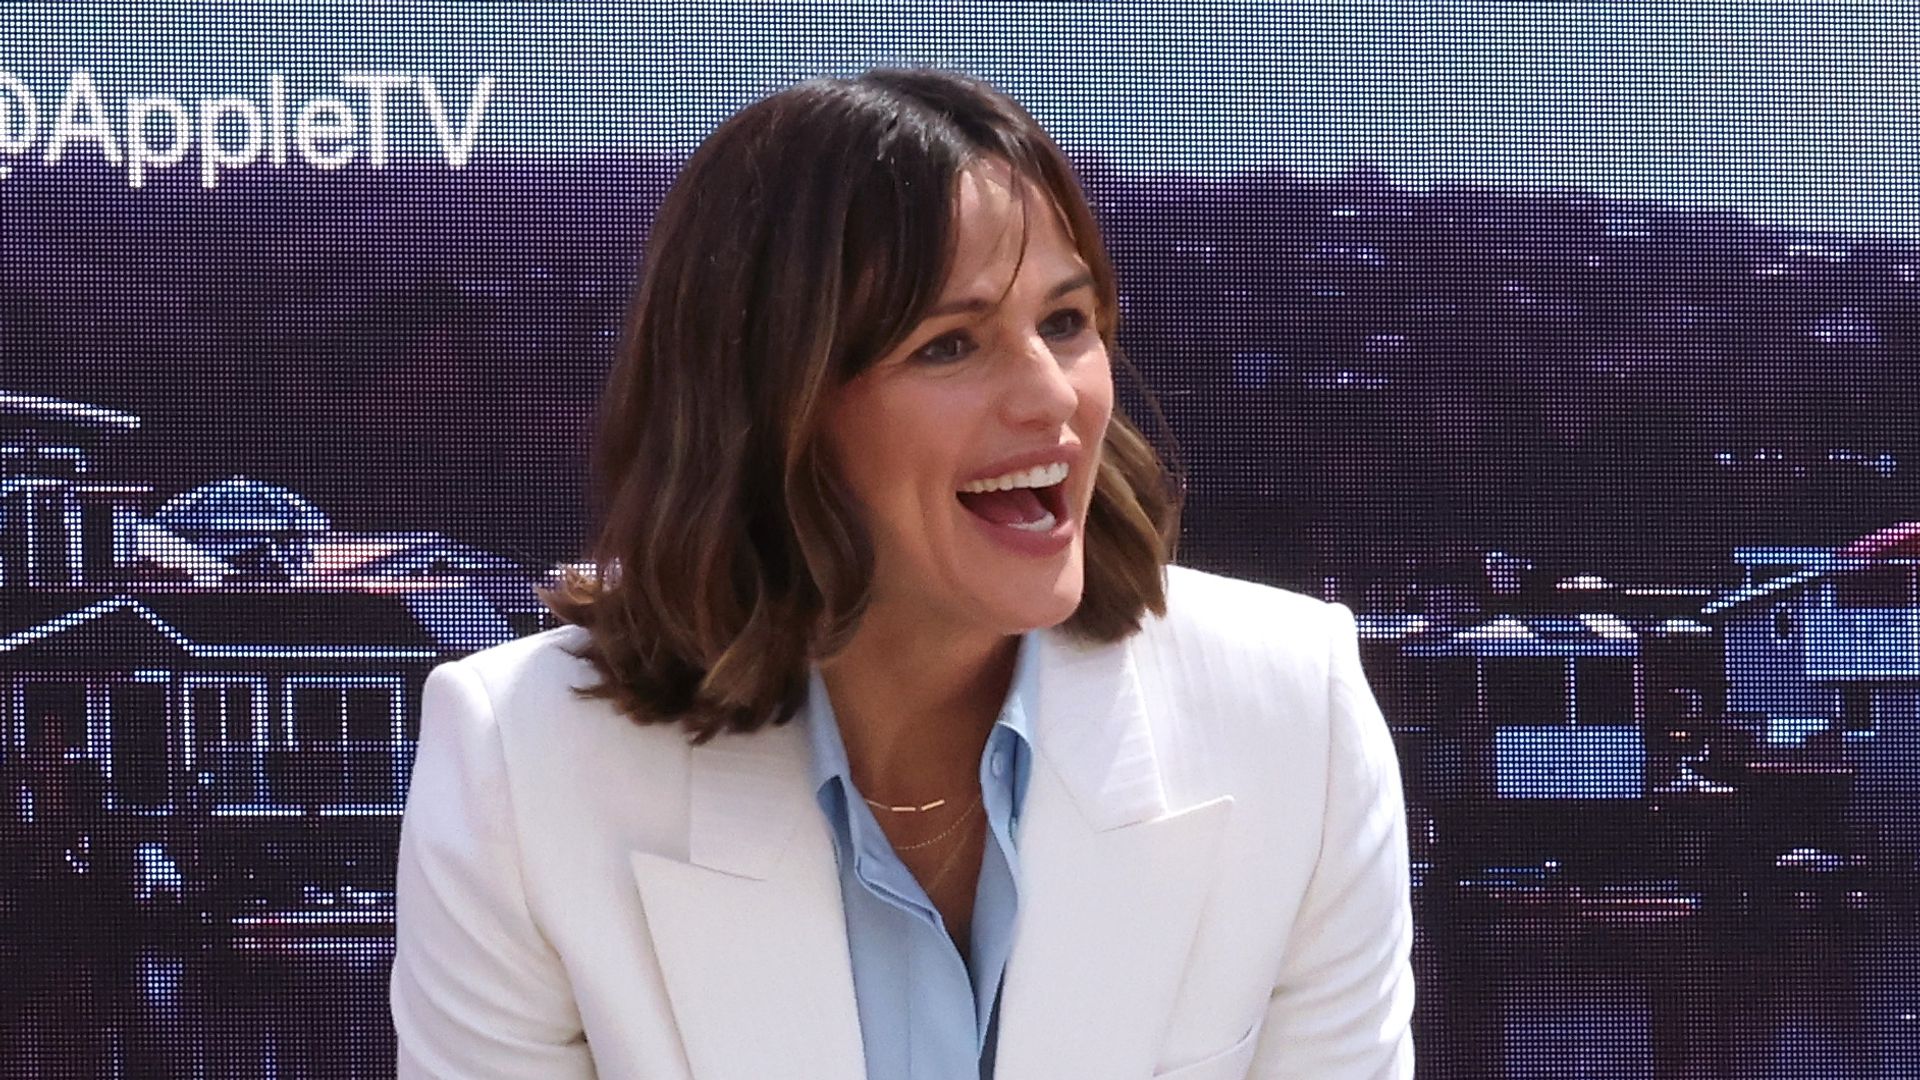 Jennifer Garner laughing in a white suit